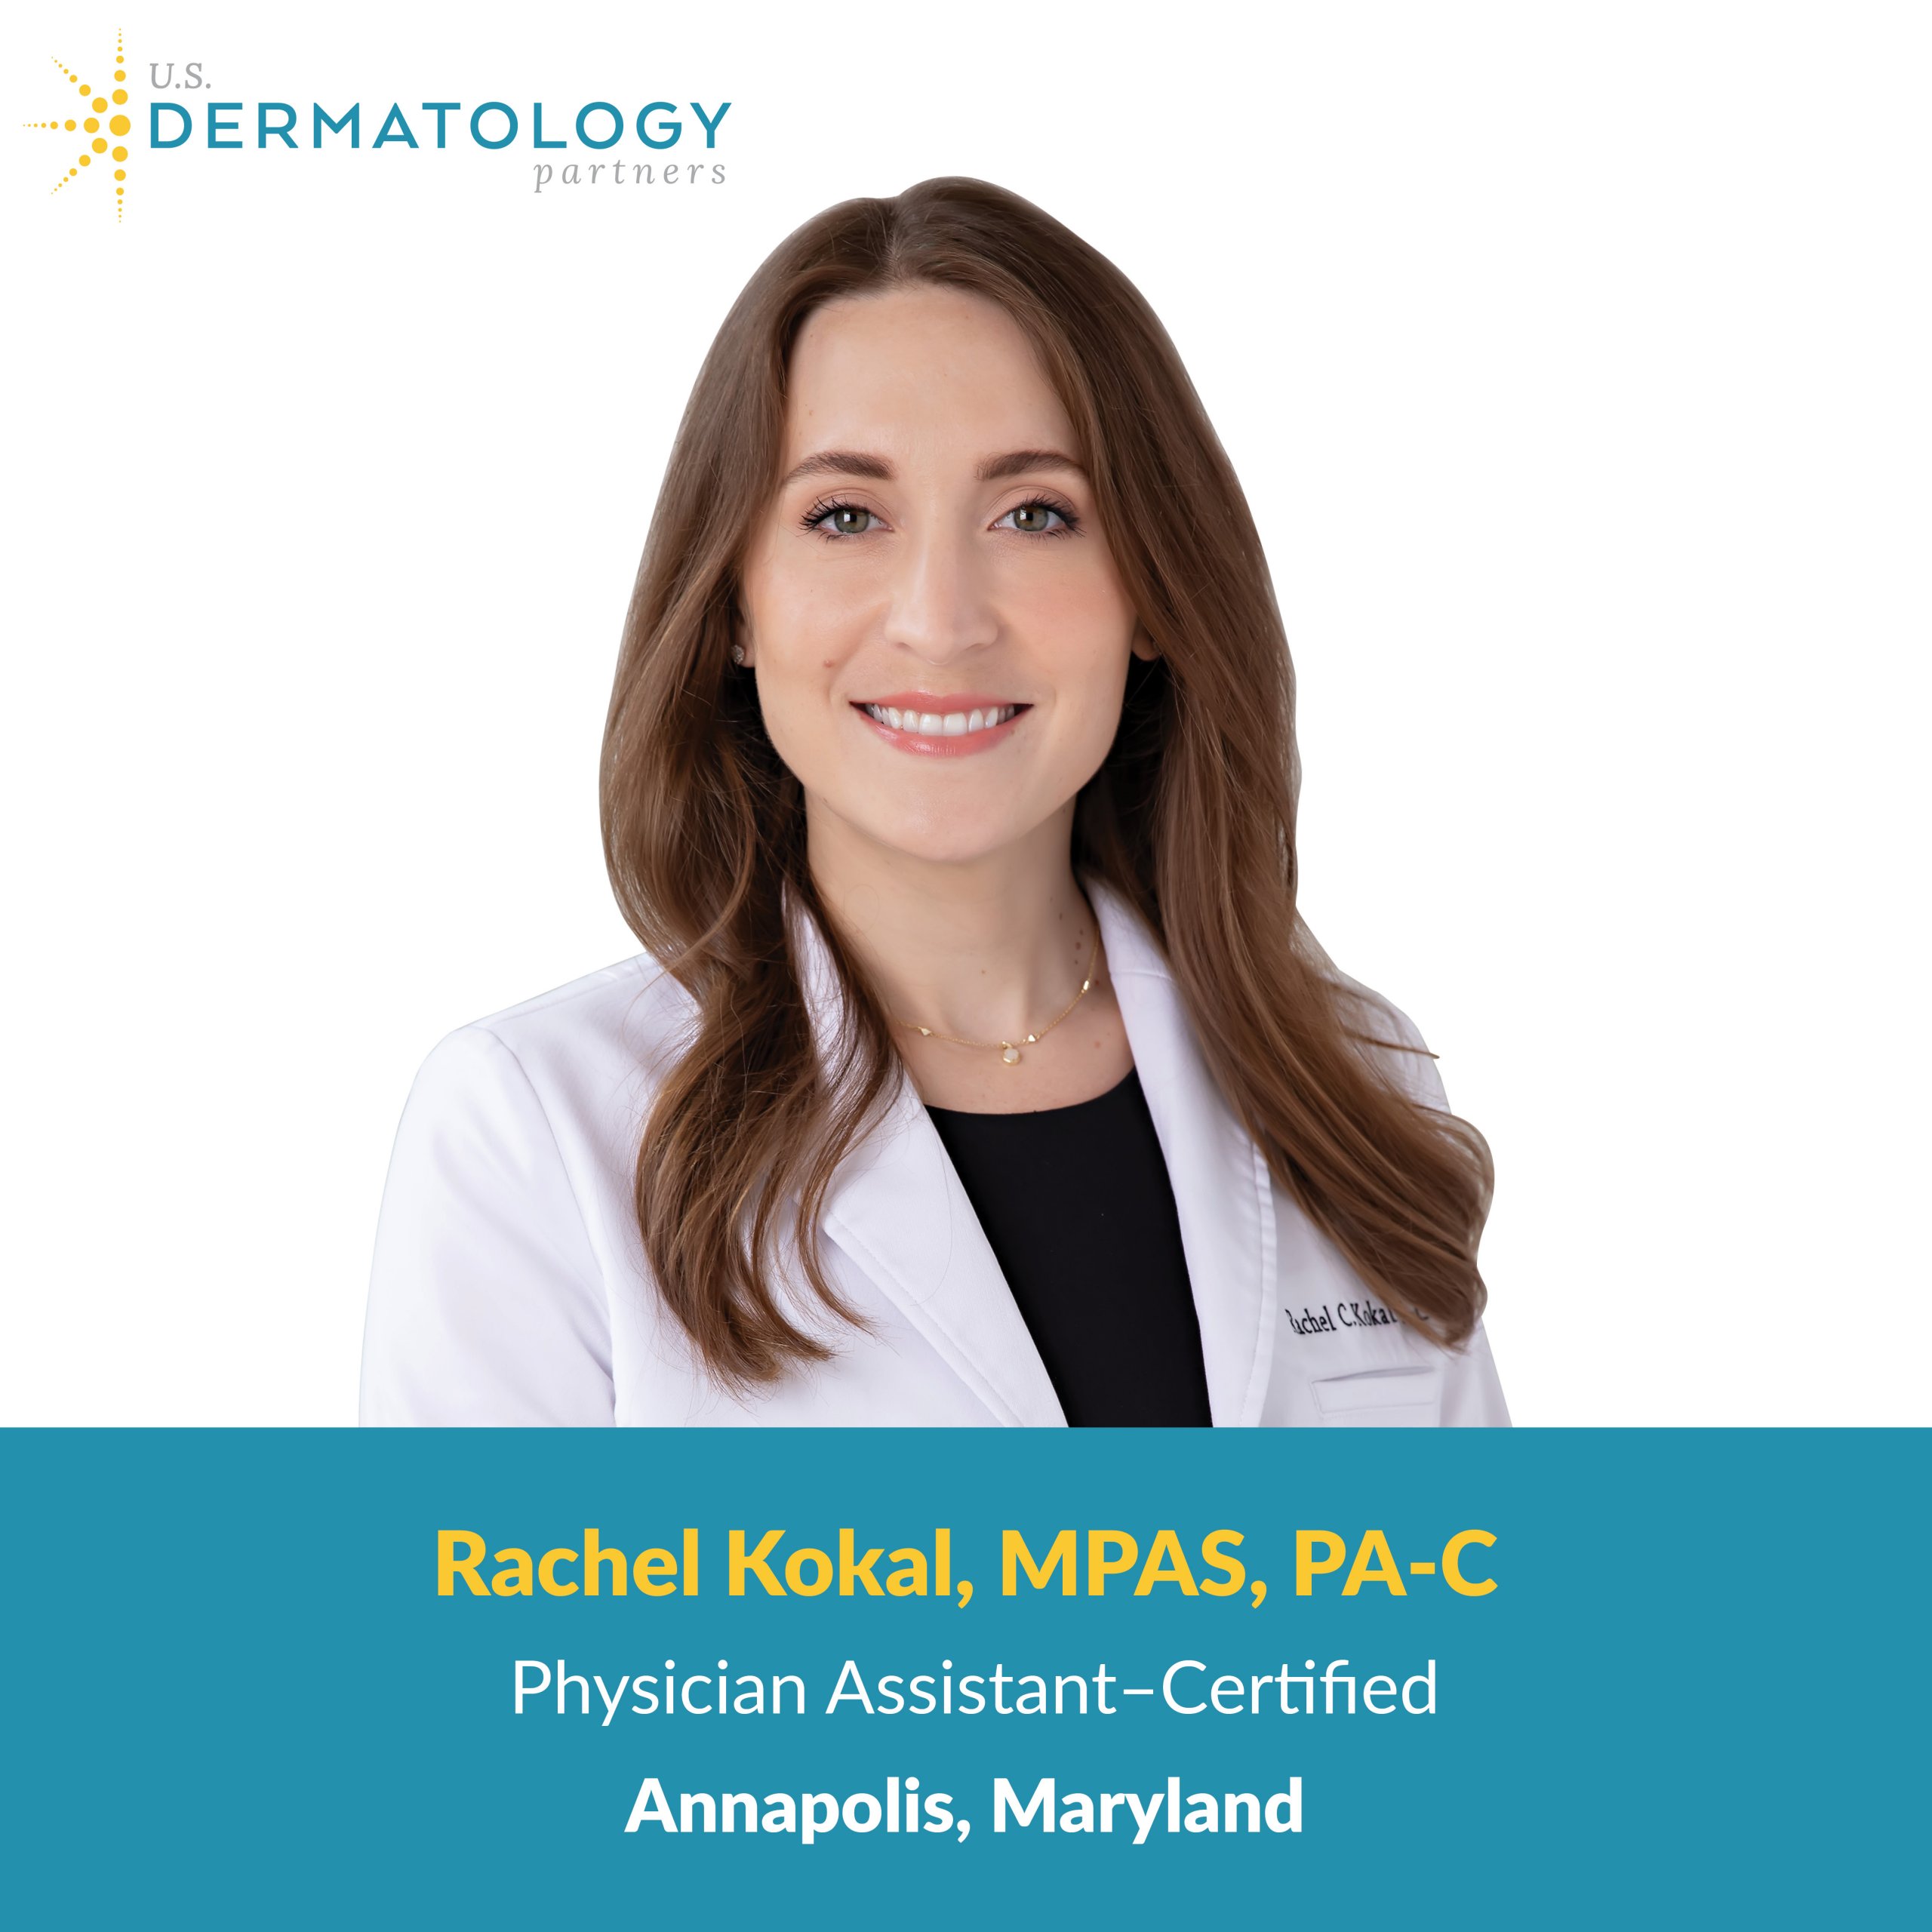 Physician Assistant, Rachel Kokal, PA-C | U.S. Dermatology Partners